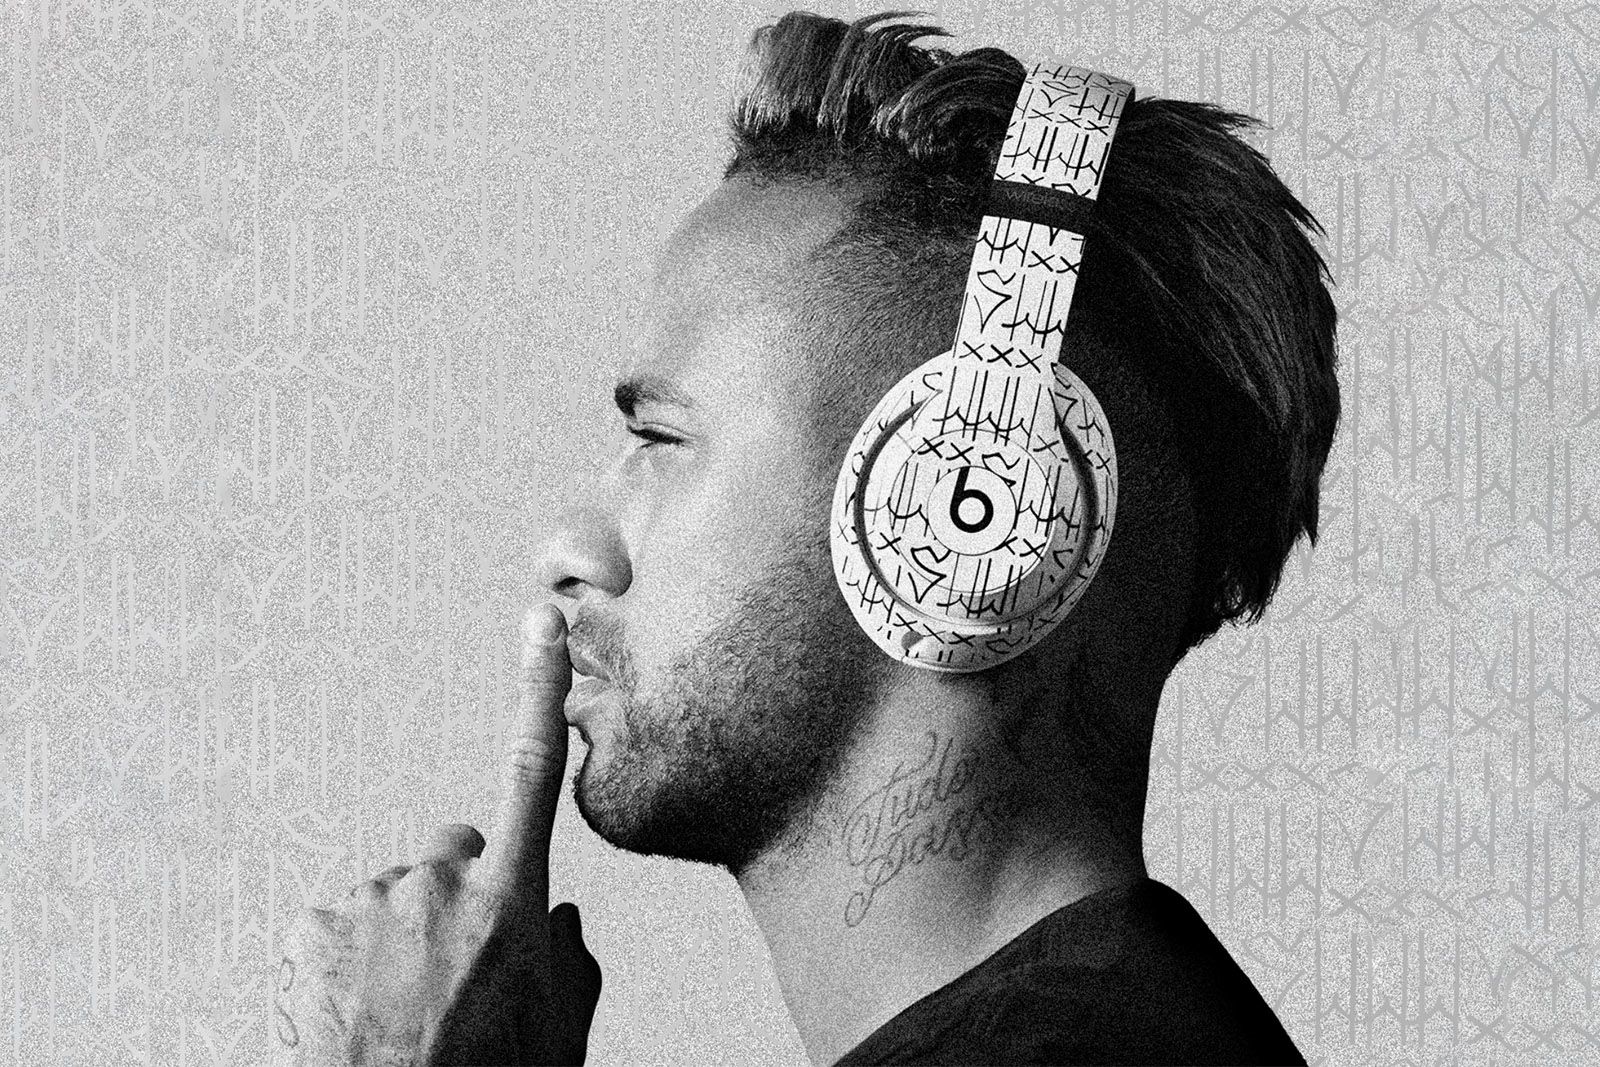 Custom Neymar Beats Studio3 headphones add a little Brazilian flair image 1